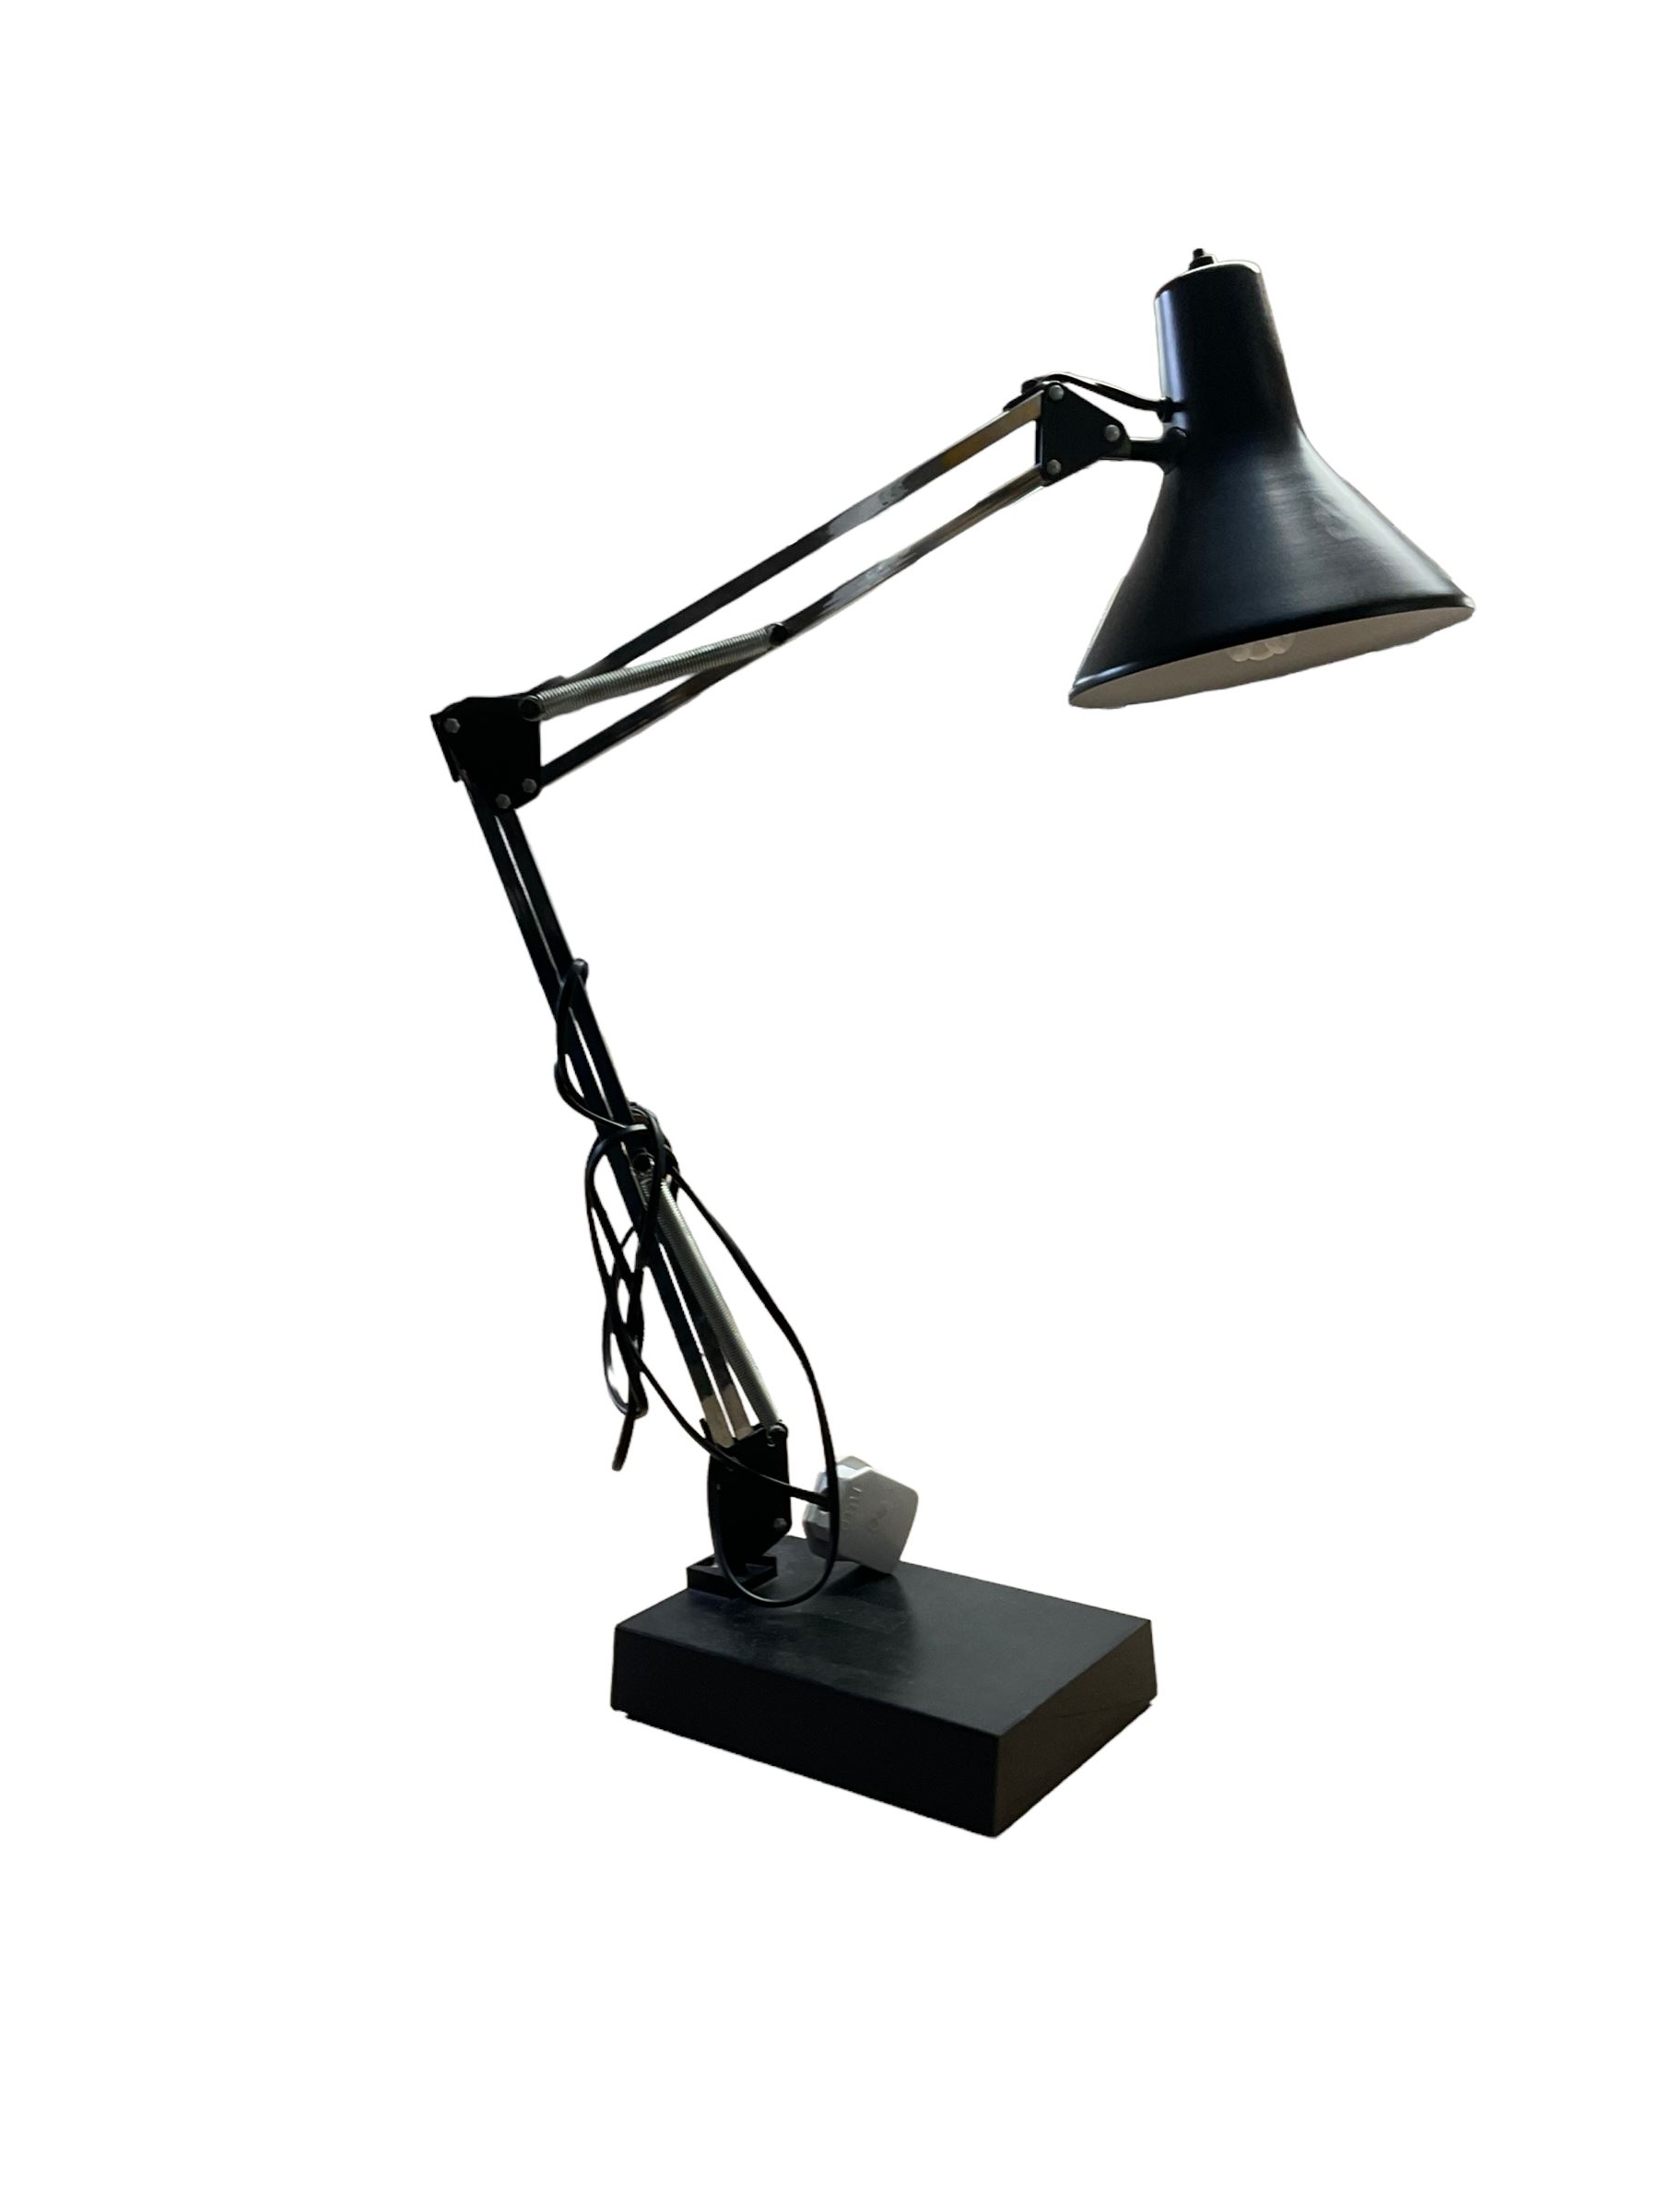 Angle poise style lamp upon a rectangular base - Image 3 of 4